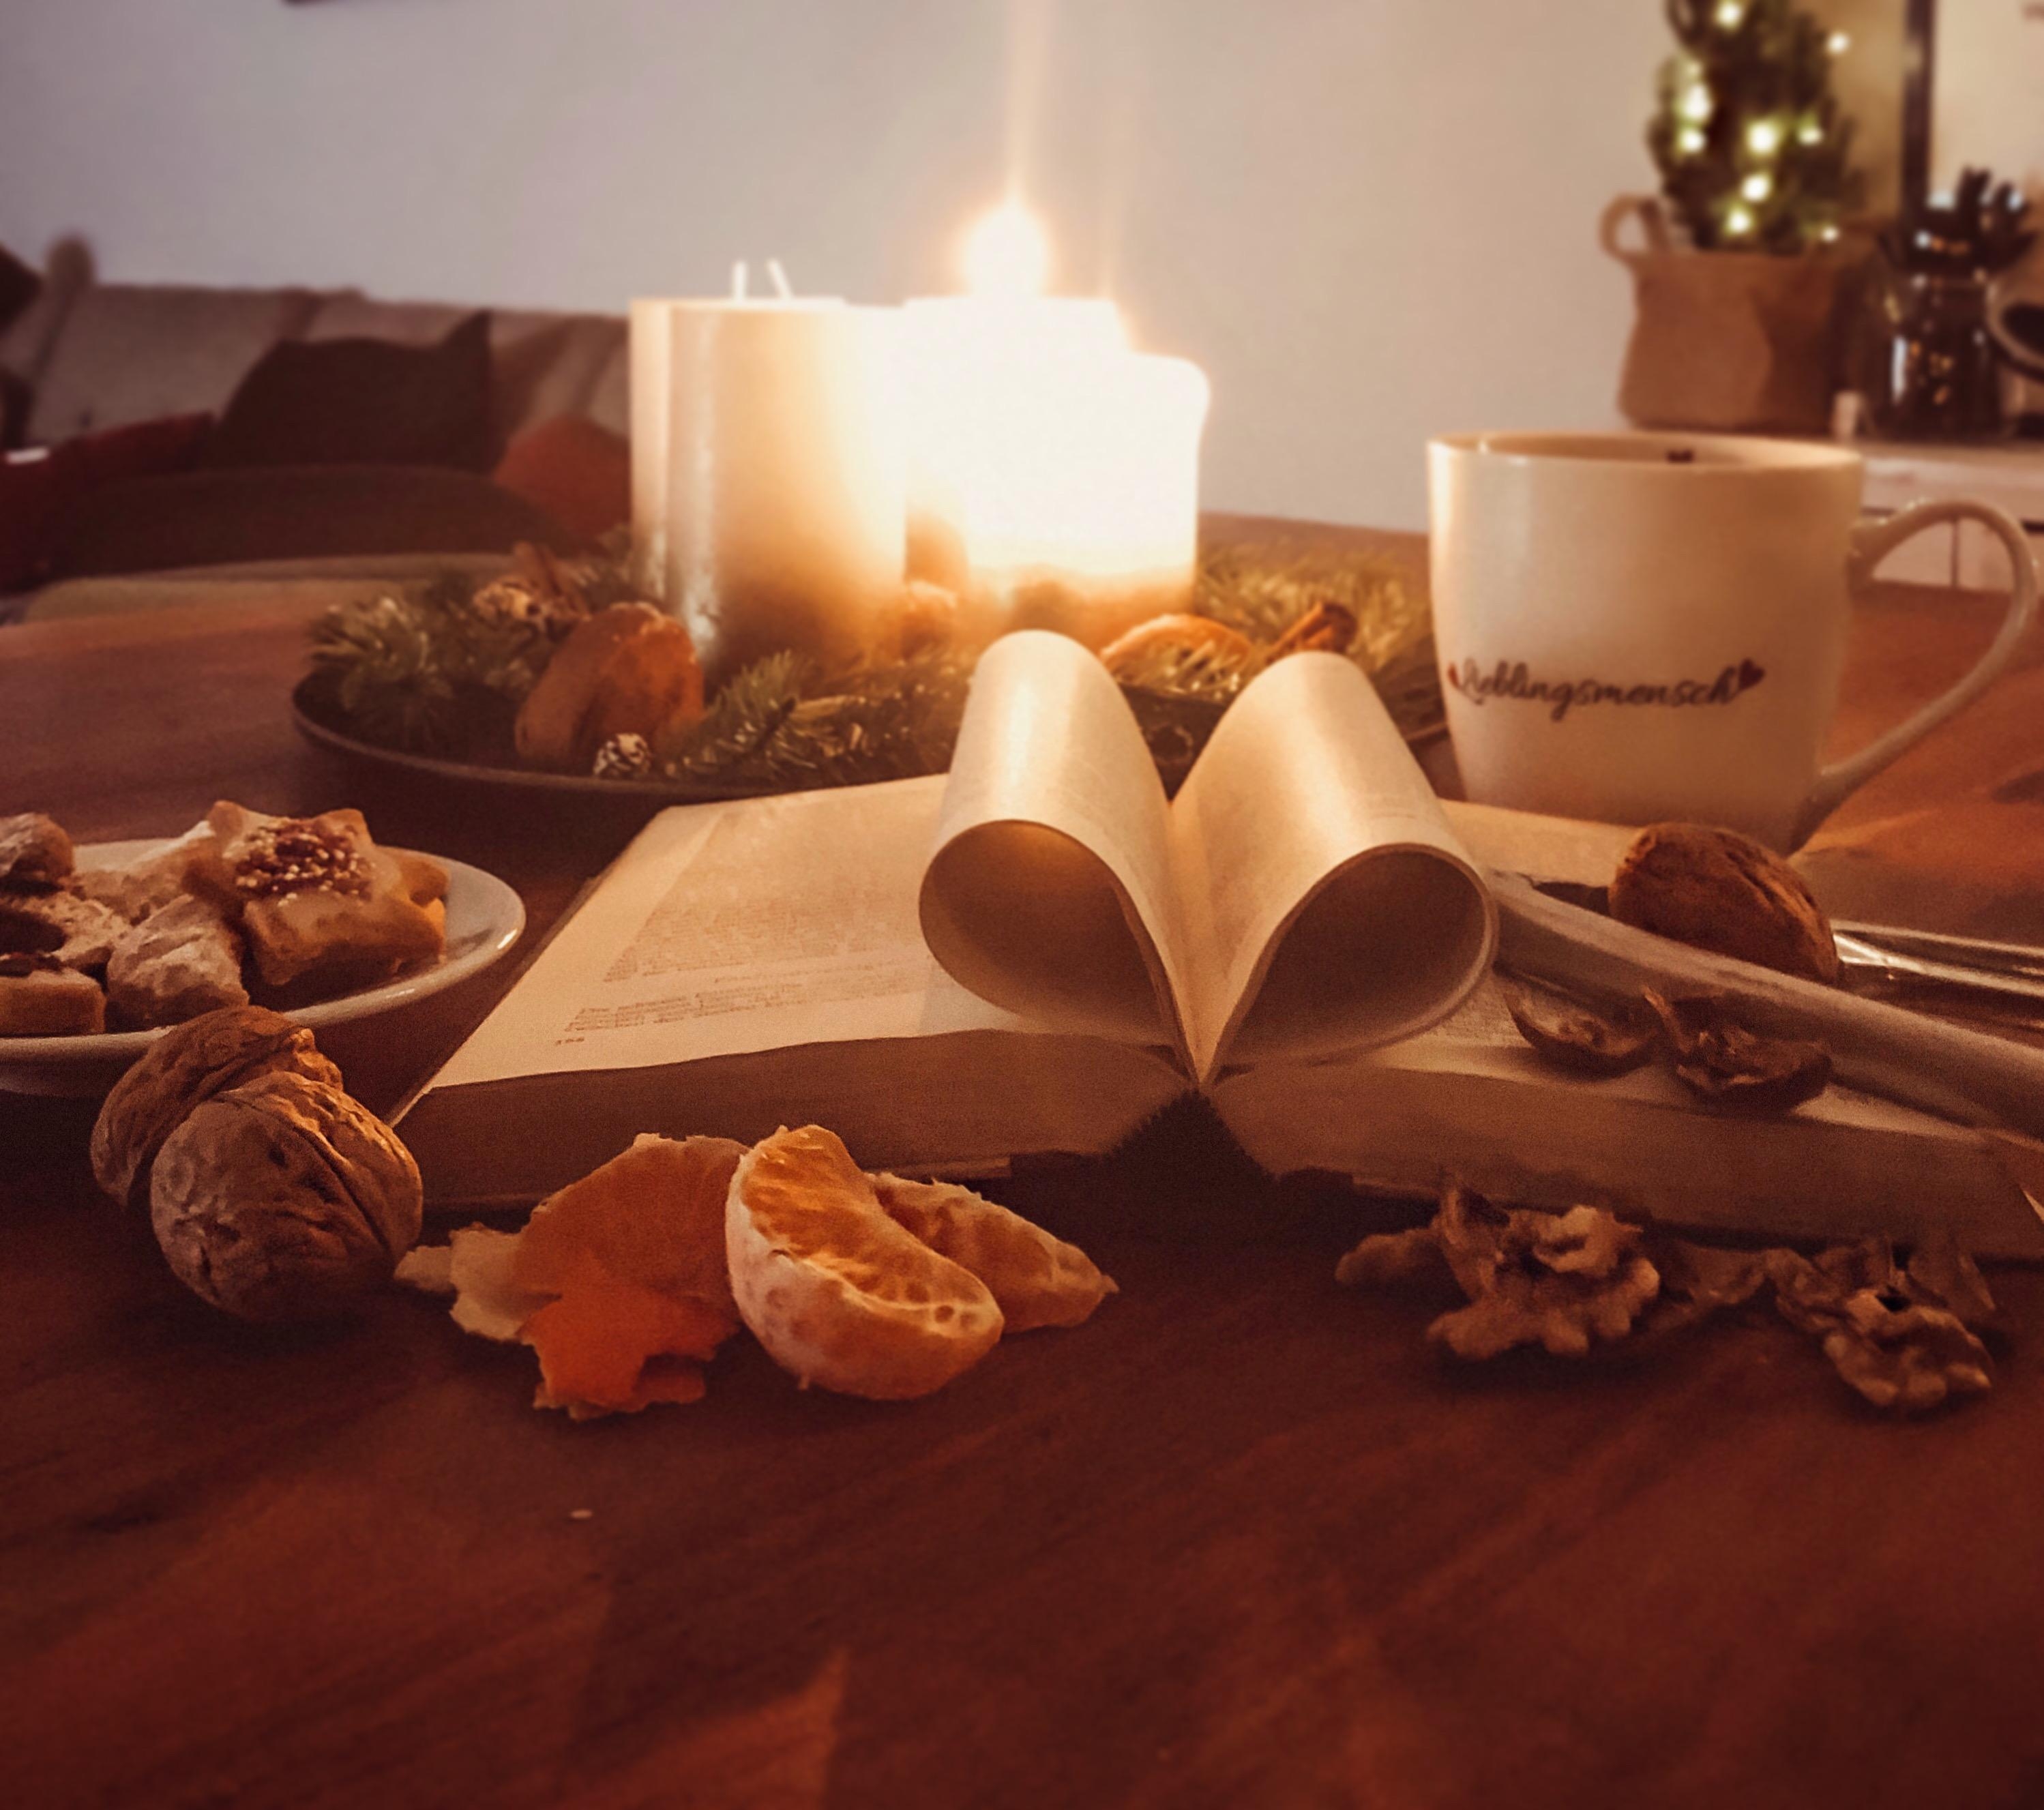 #tableontuesday #weihnachtsaugenblick #cozy #adventskranz #interior #weihnachten #kerzen #leckereien